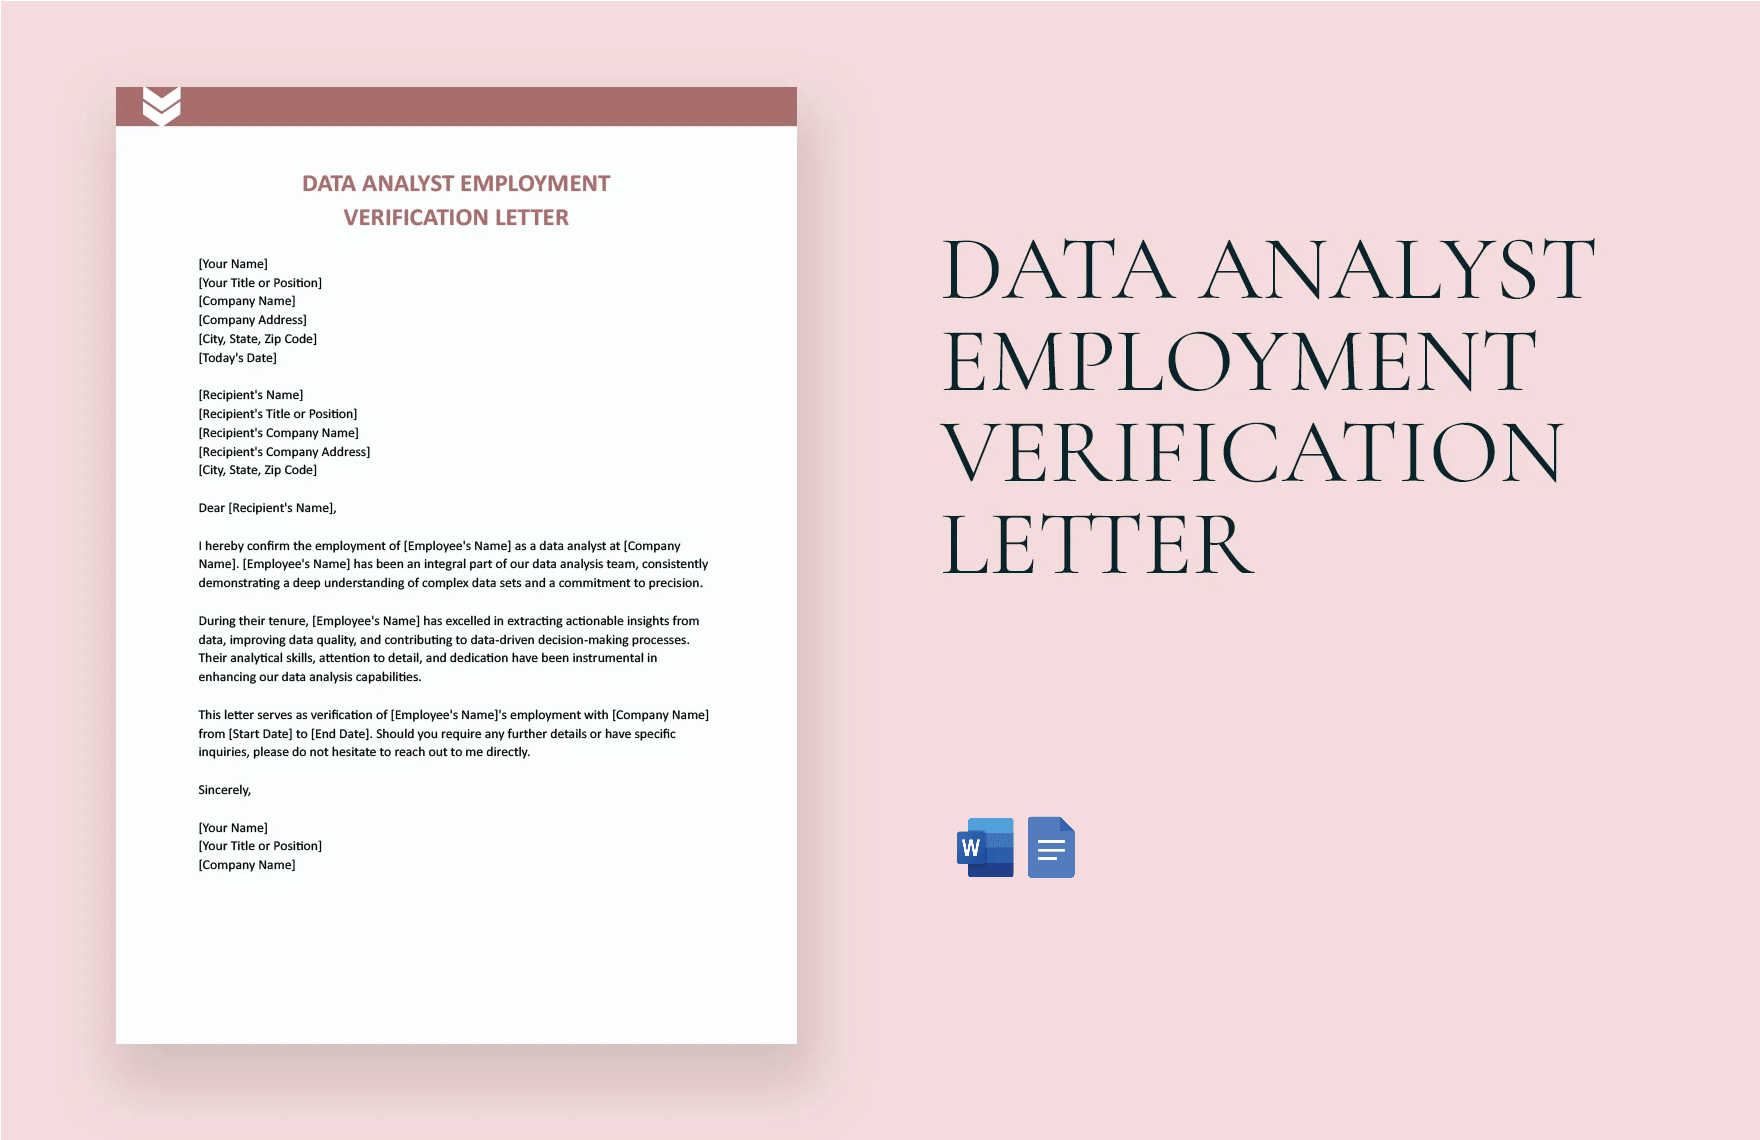 Data Analyst Employment Verification Letter